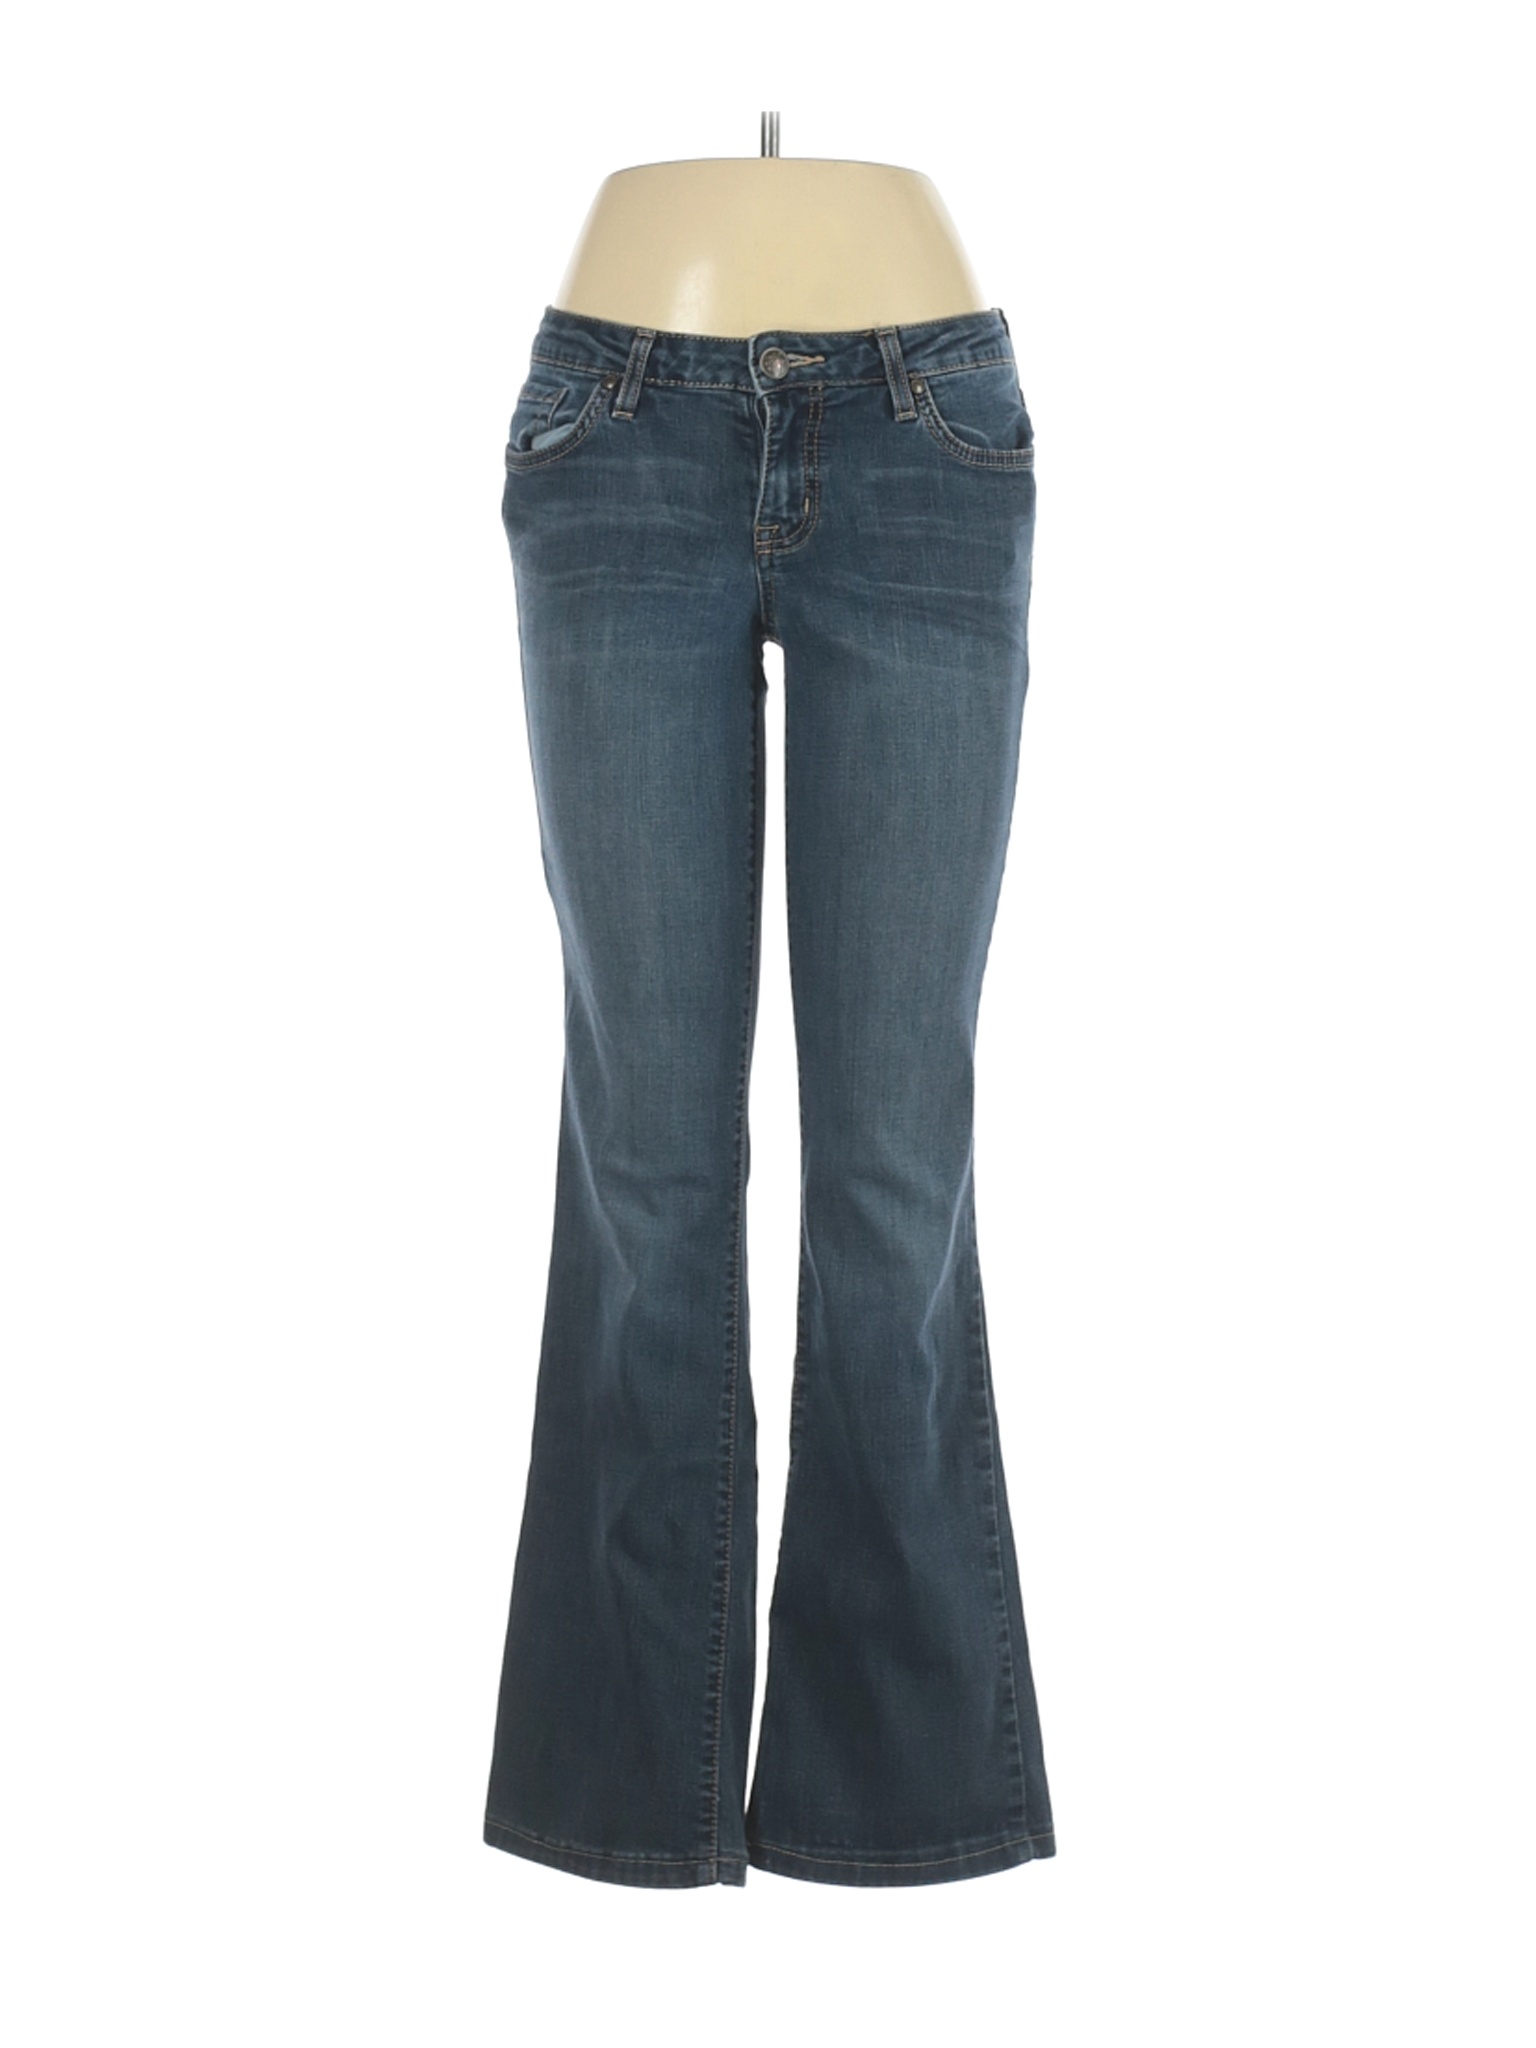 Jessica Simpson Women Blue Jeans 28W | eBay